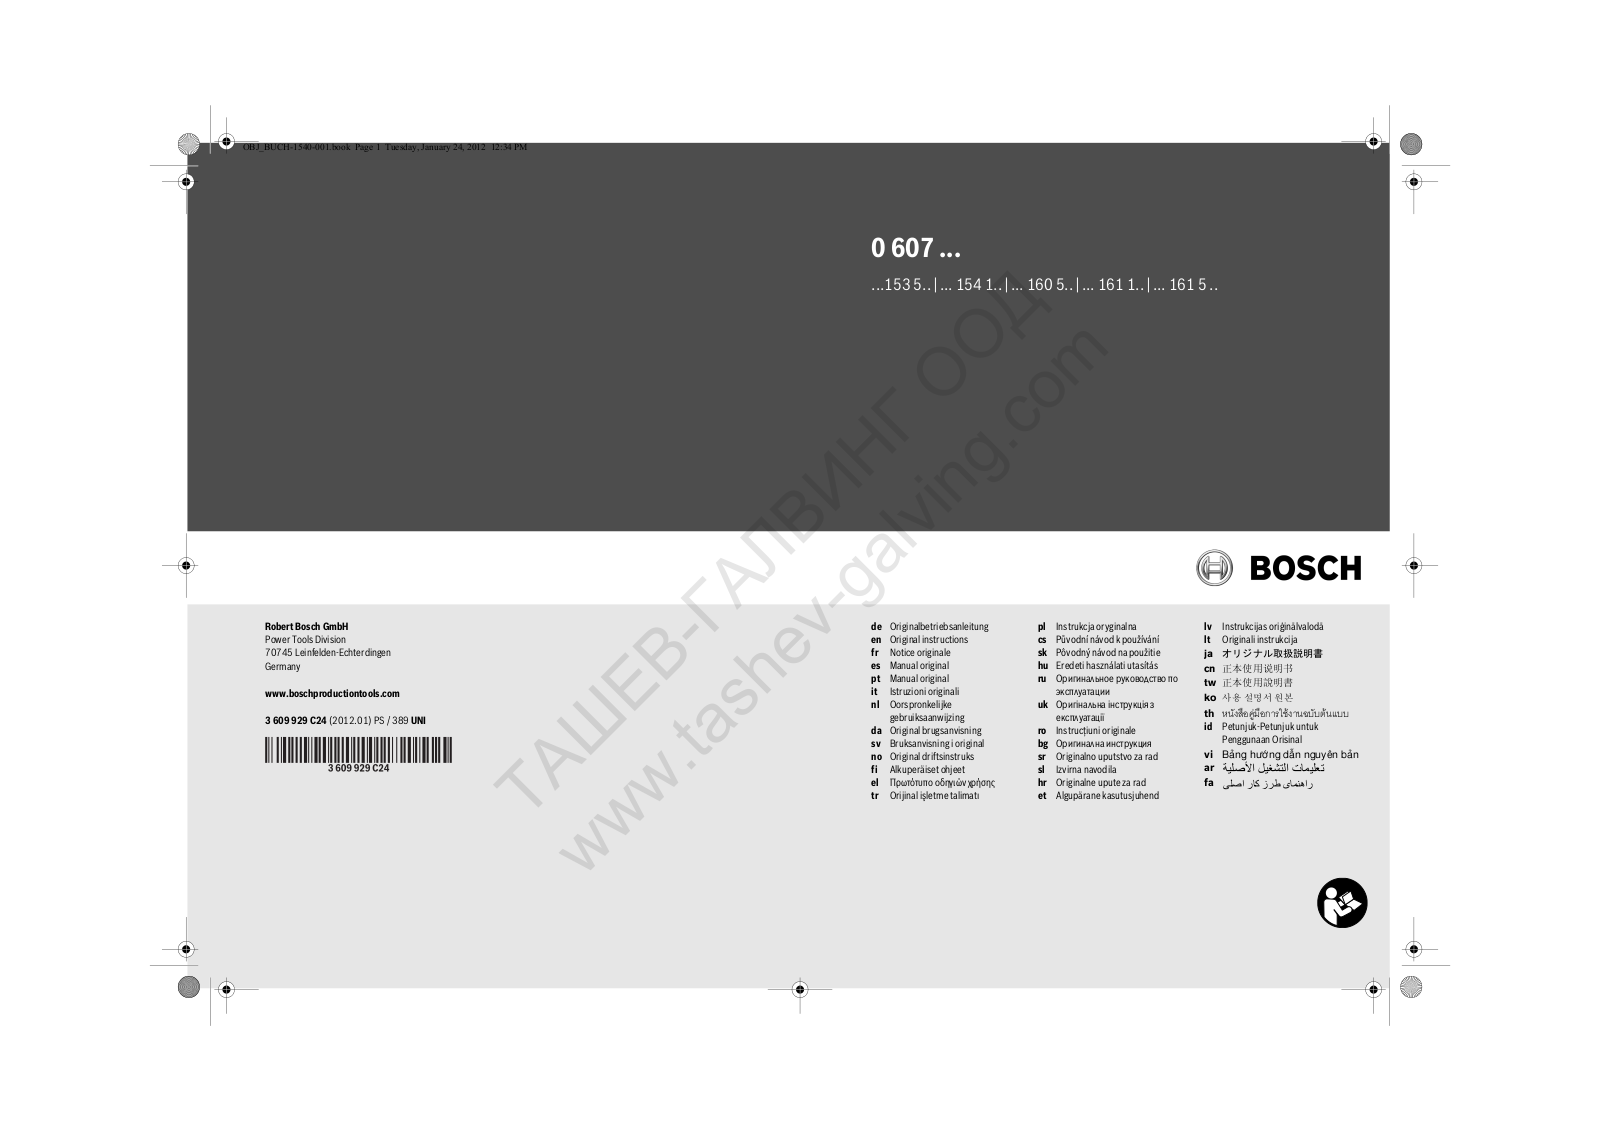 Bosch 0 607 154 Series, 0 607 160 Series, 0 607 161 Series, 0 607 153 Series Original Instructions Manual